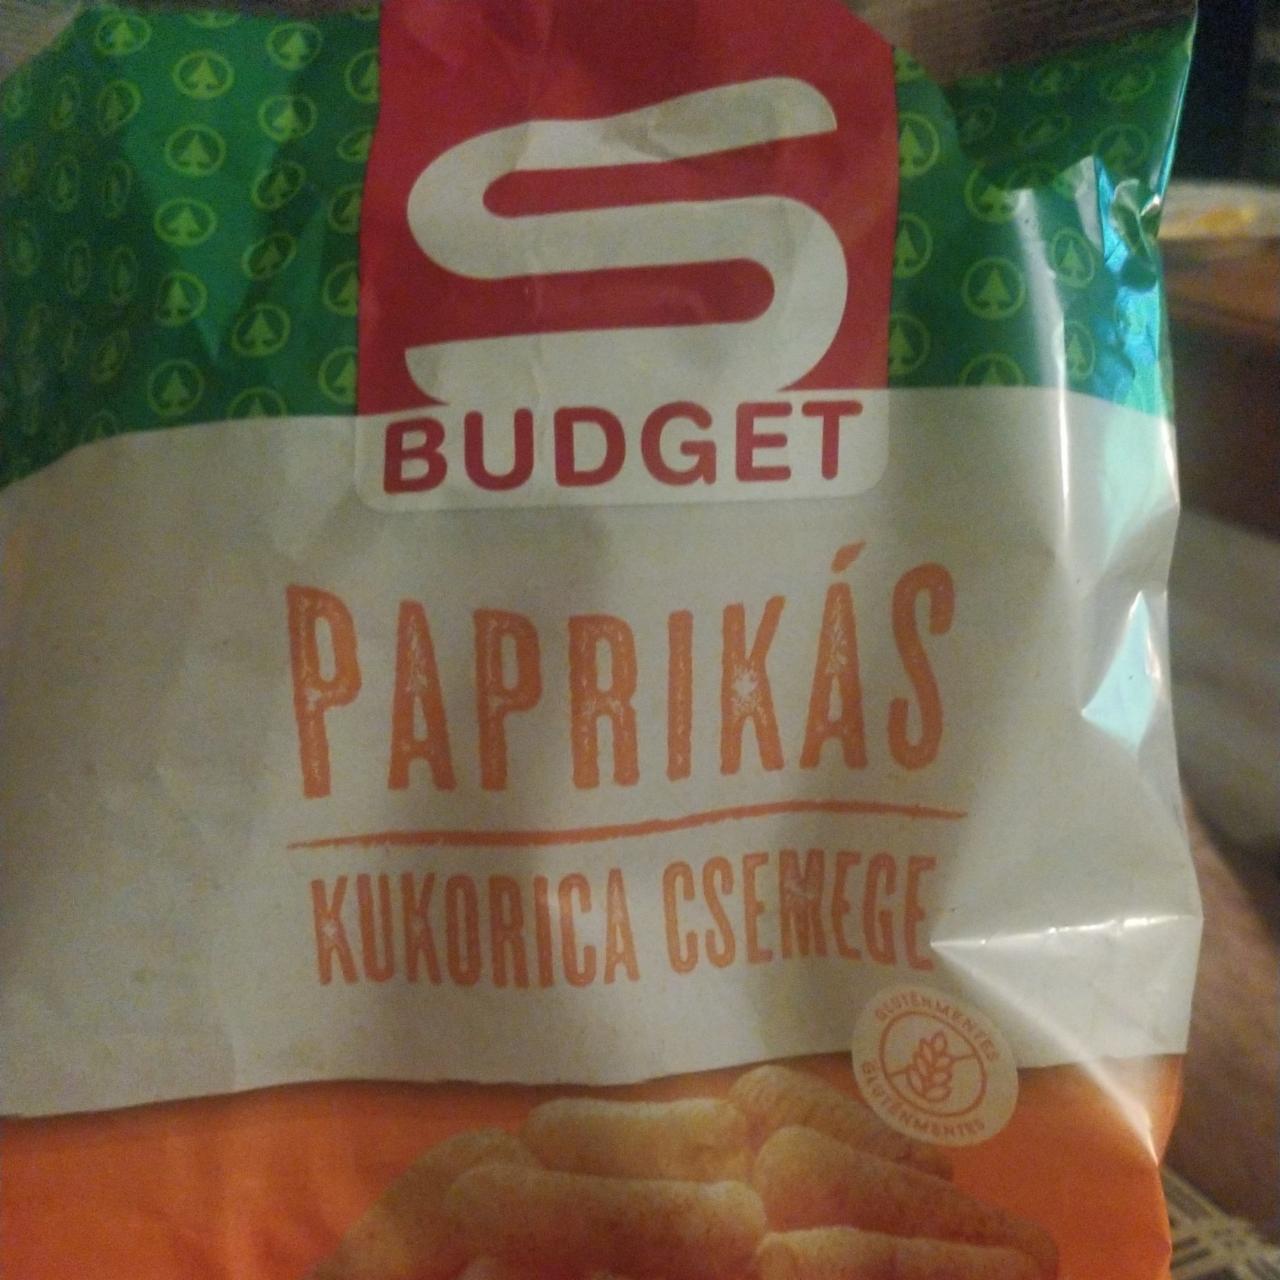 Képek - Paprikás kukorica csemege S Budget